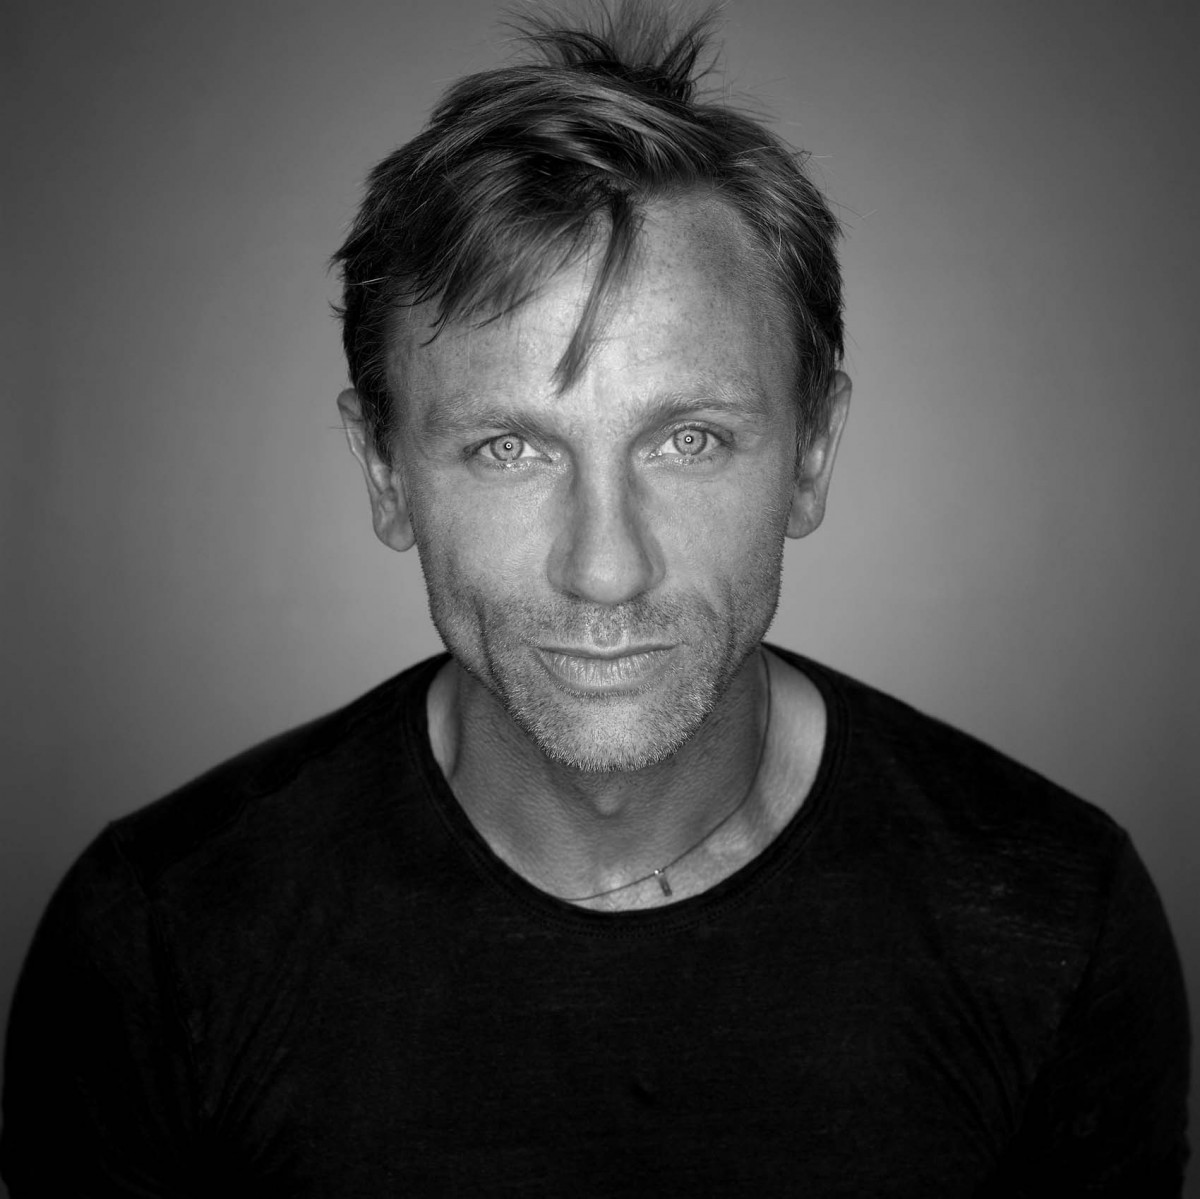 Daniel Craig photo 89 of 798 pics, wallpaper - photo #156884 - ThePlace2